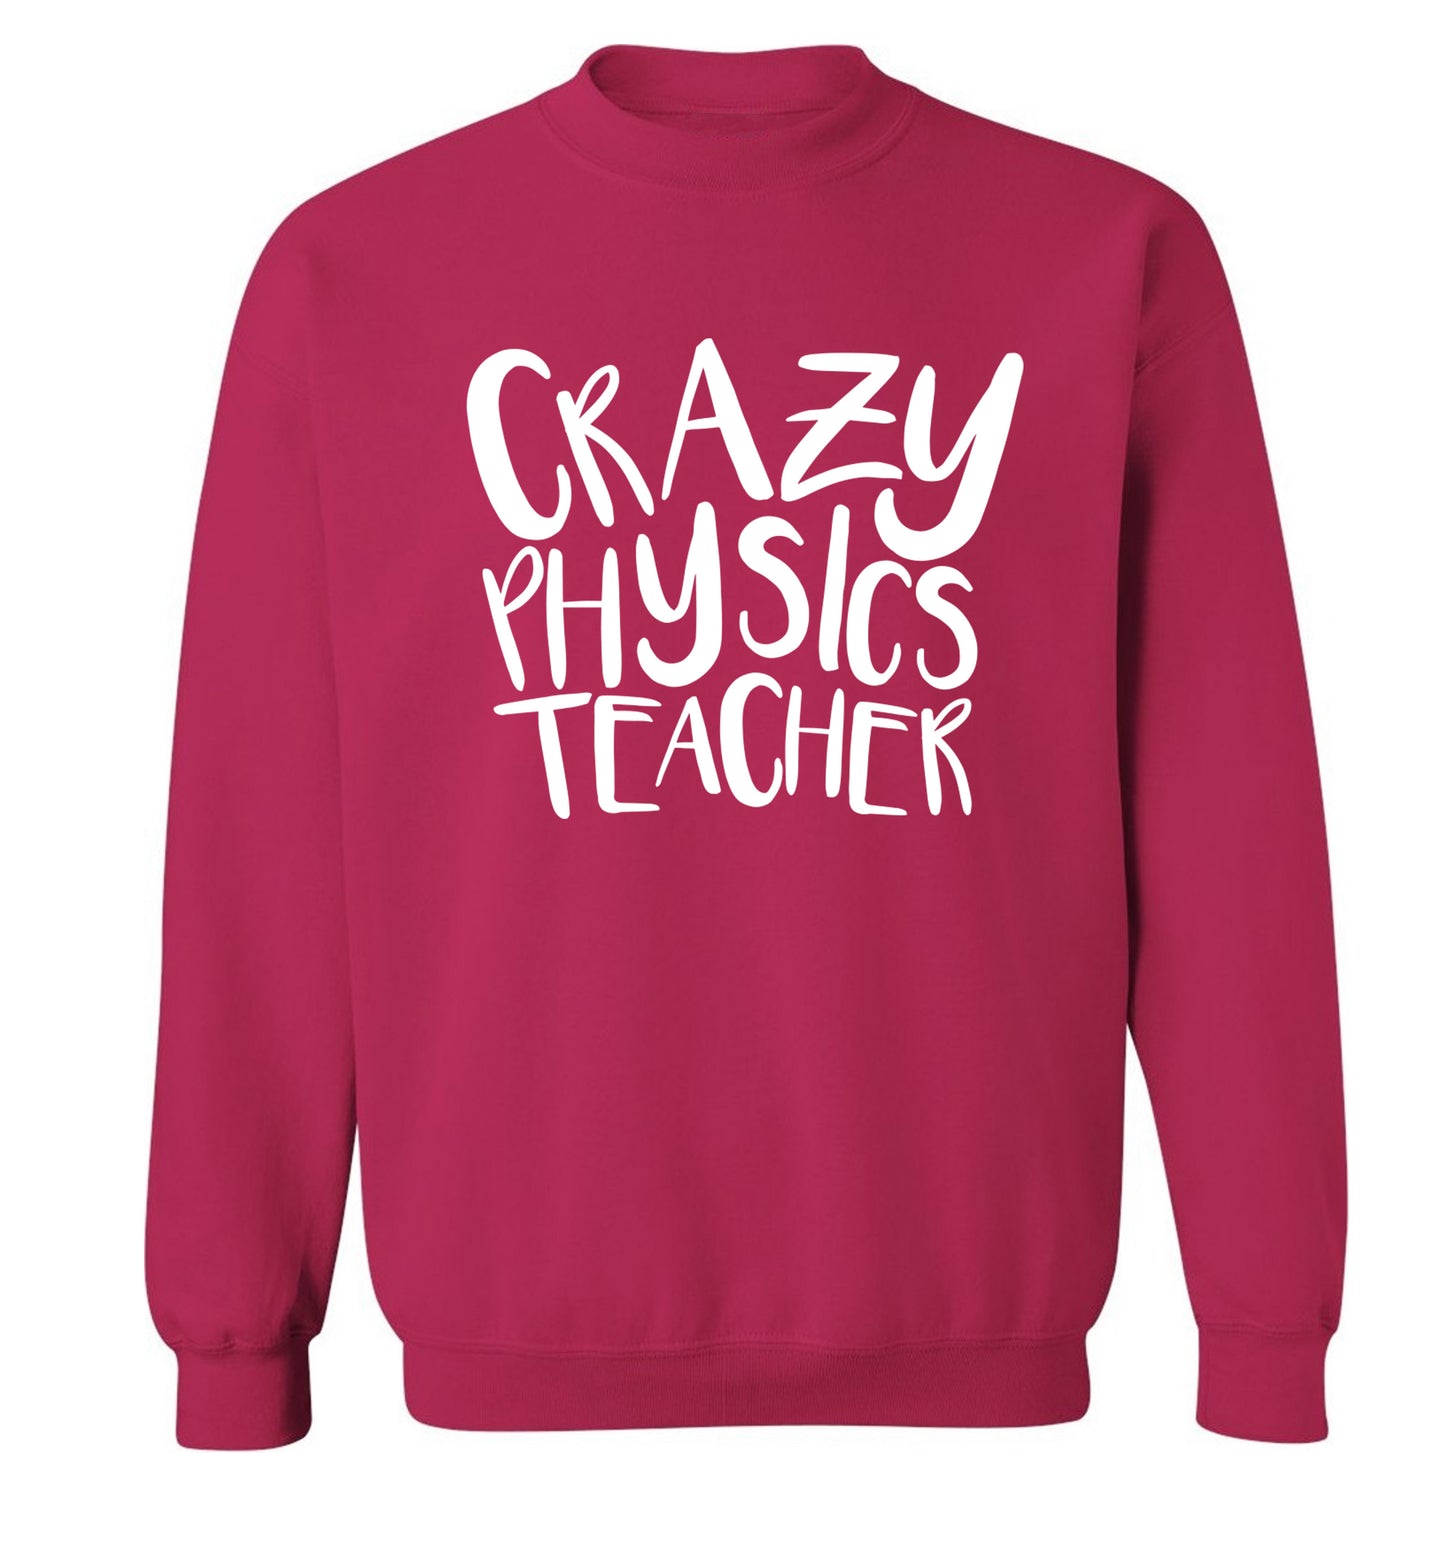 Crazy physics teacher Adult's unisex pink Sweater 2XL